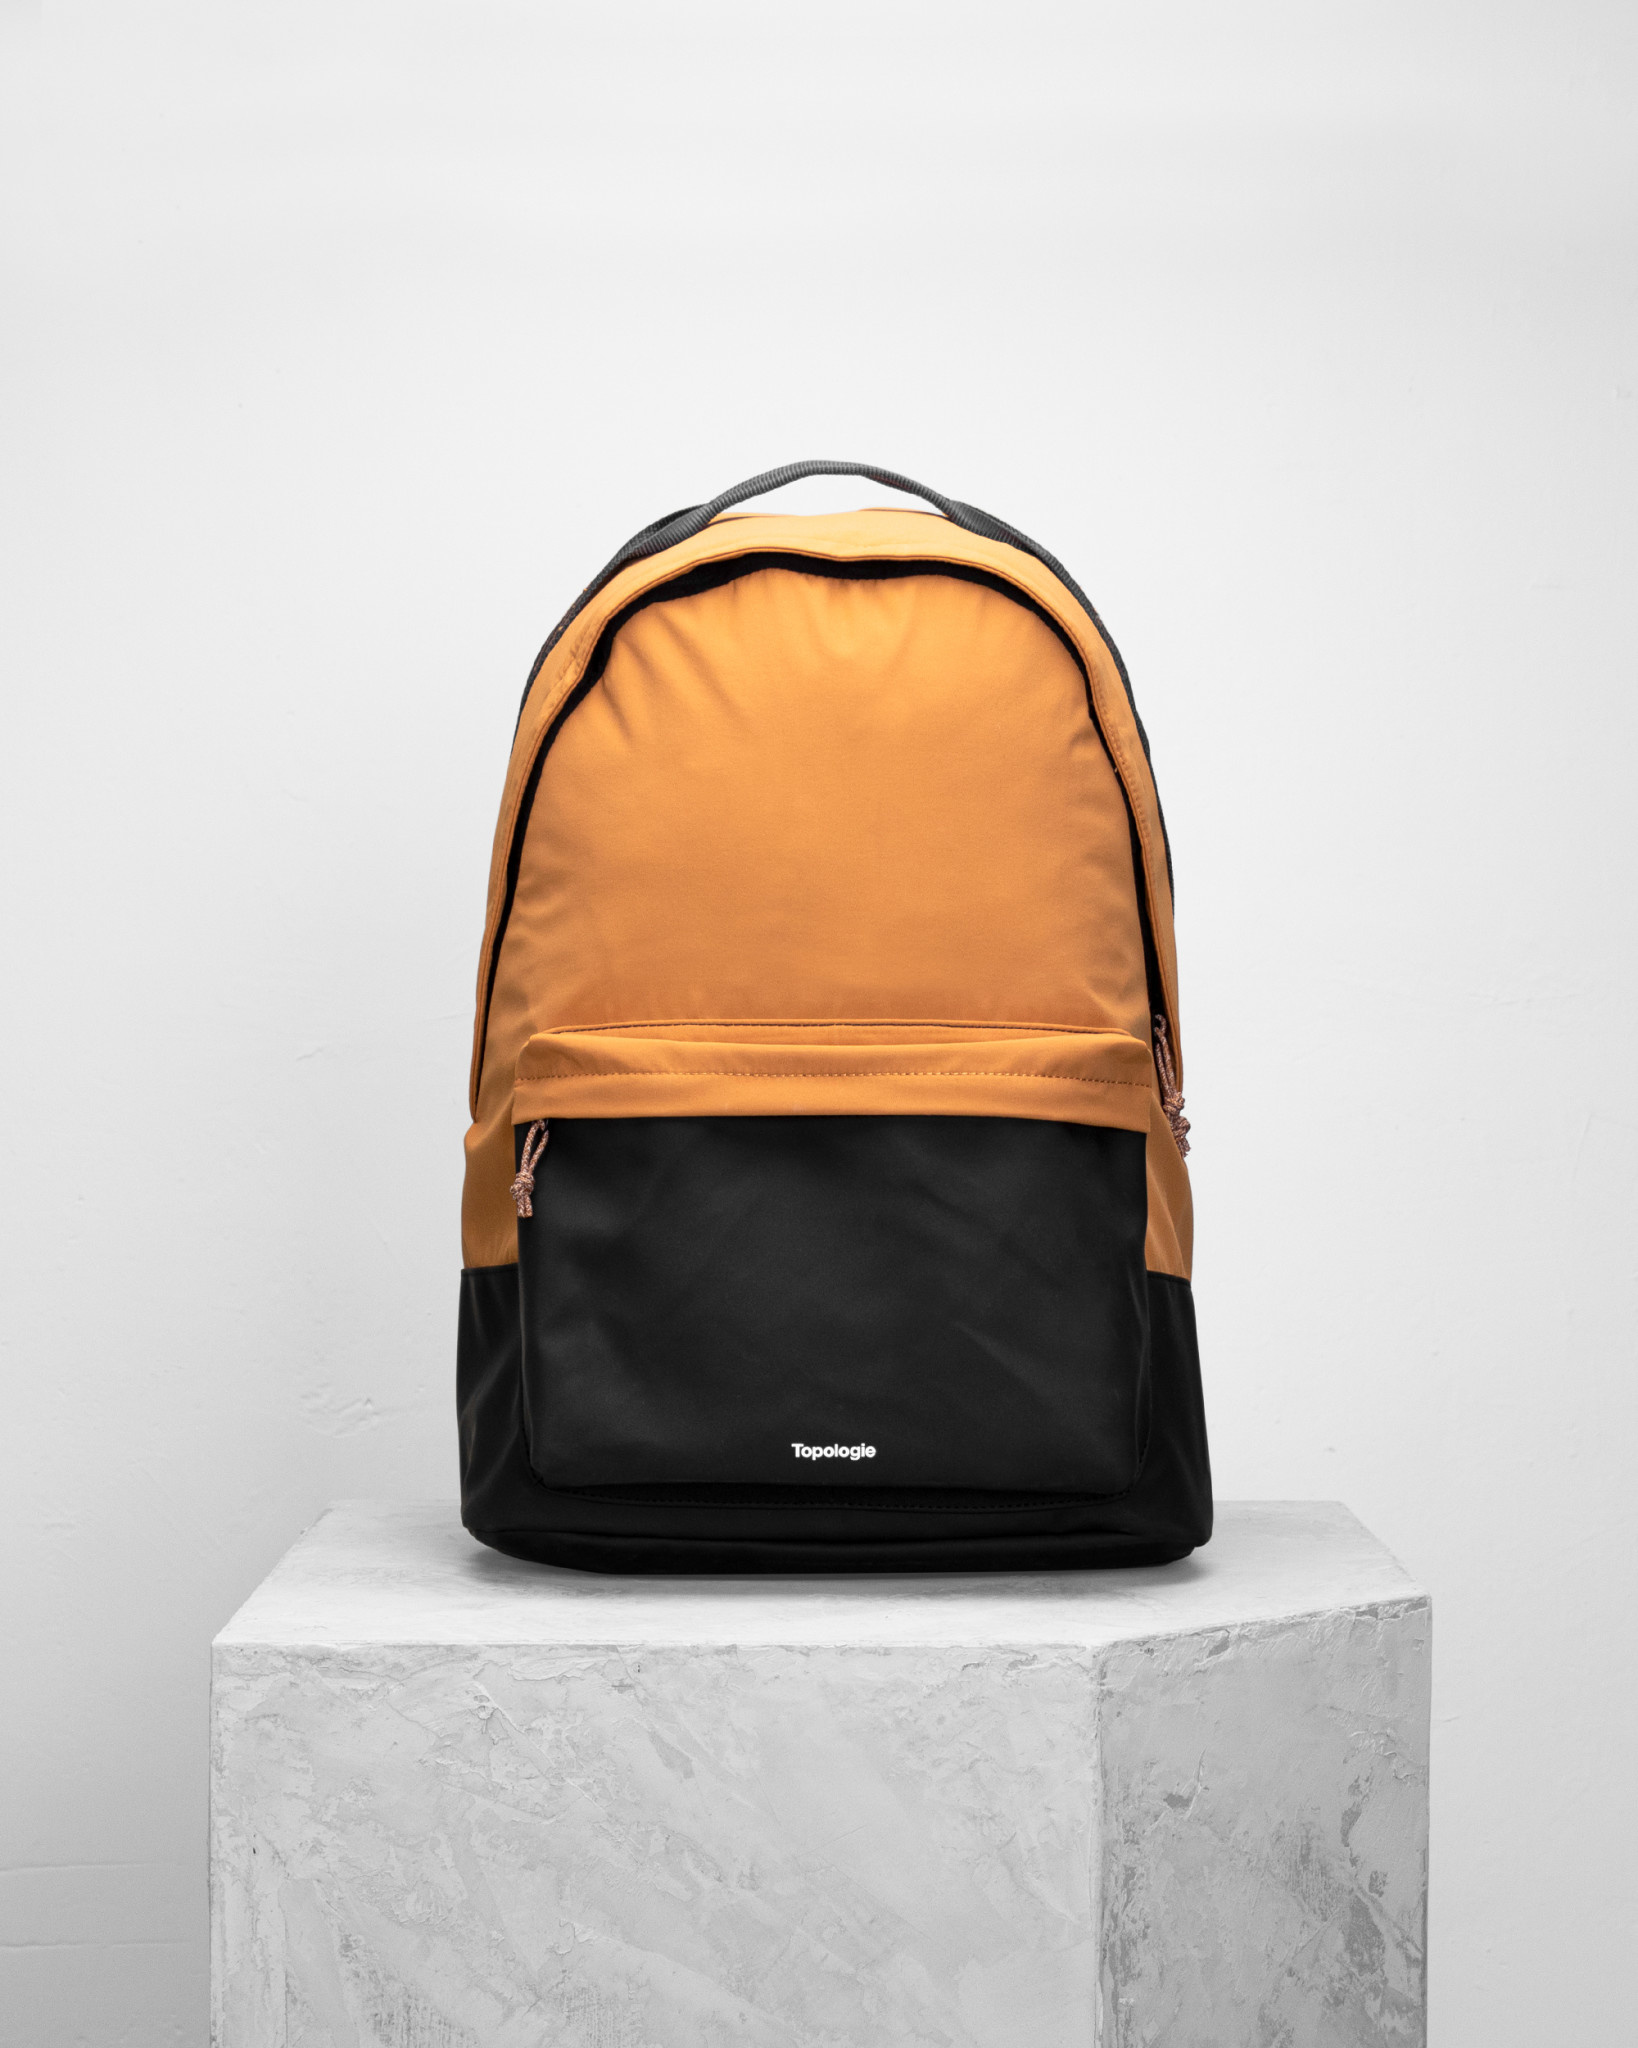 Topologie Block Backpack